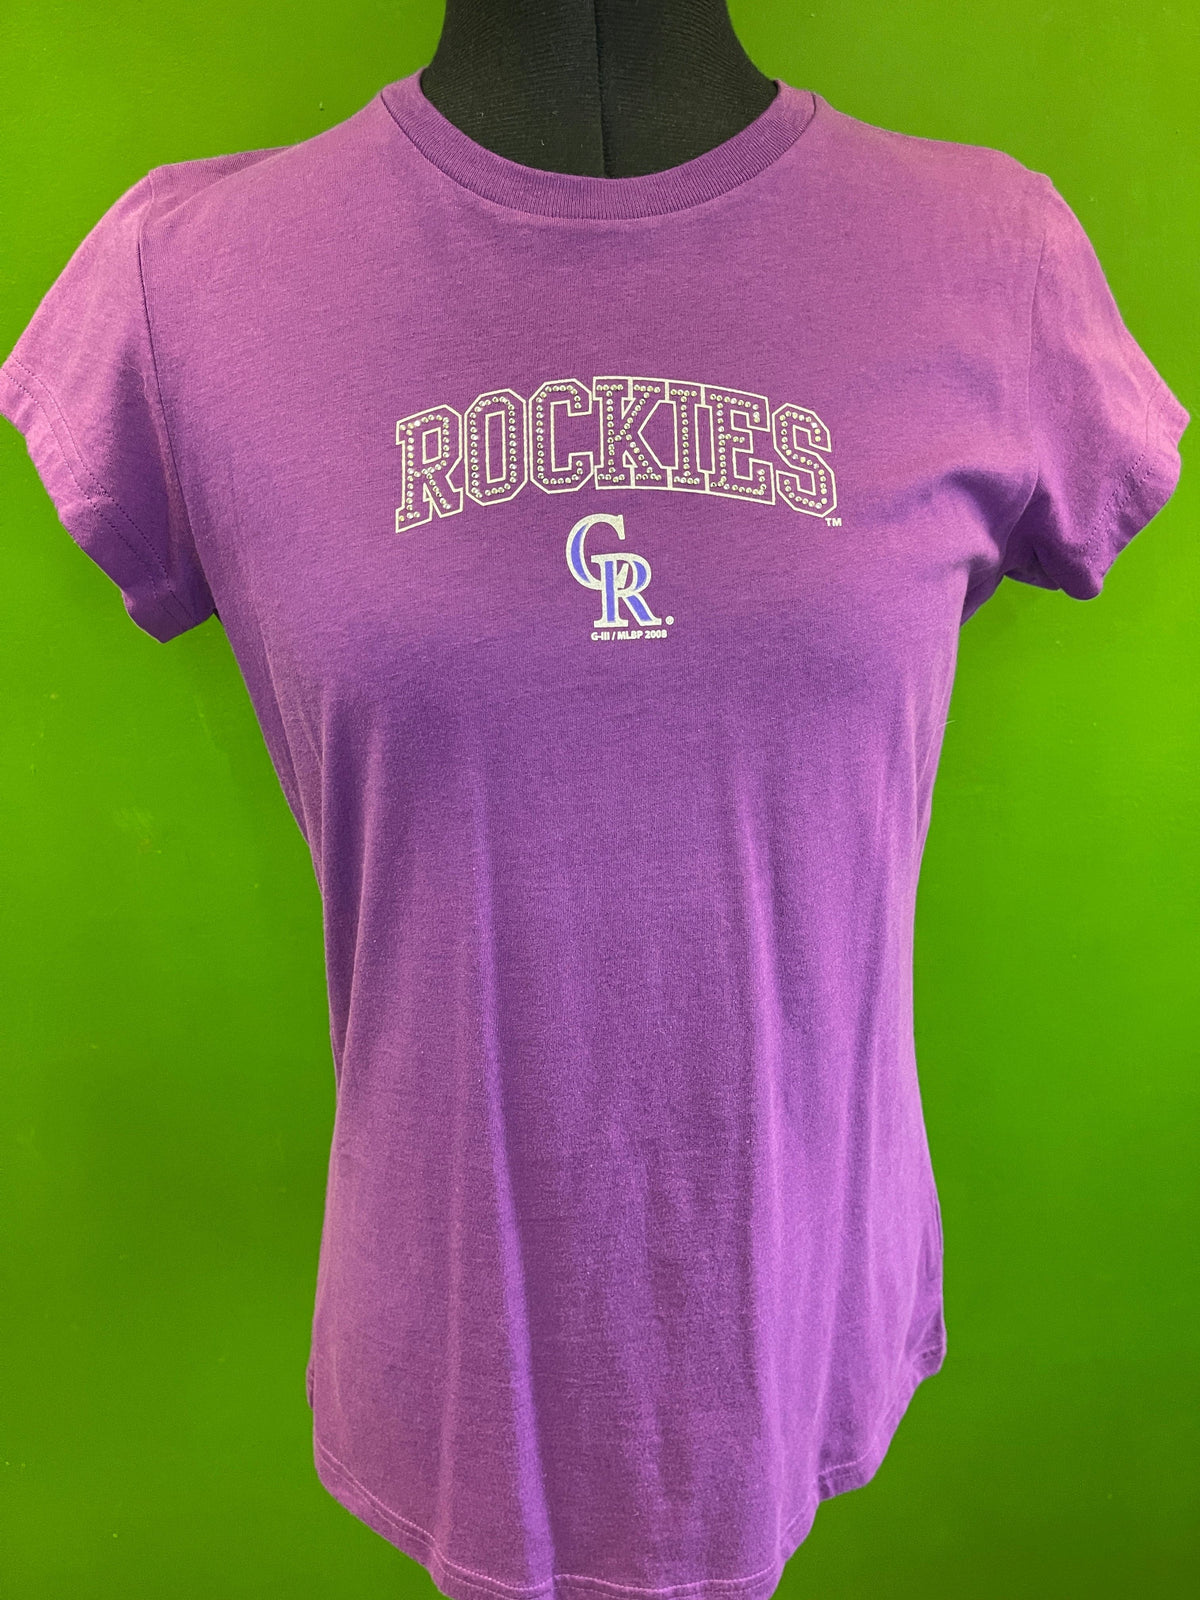 MLB Colorado Rockies GIII Sparkly Rhinestone Girls' T-Shirt Youth Large